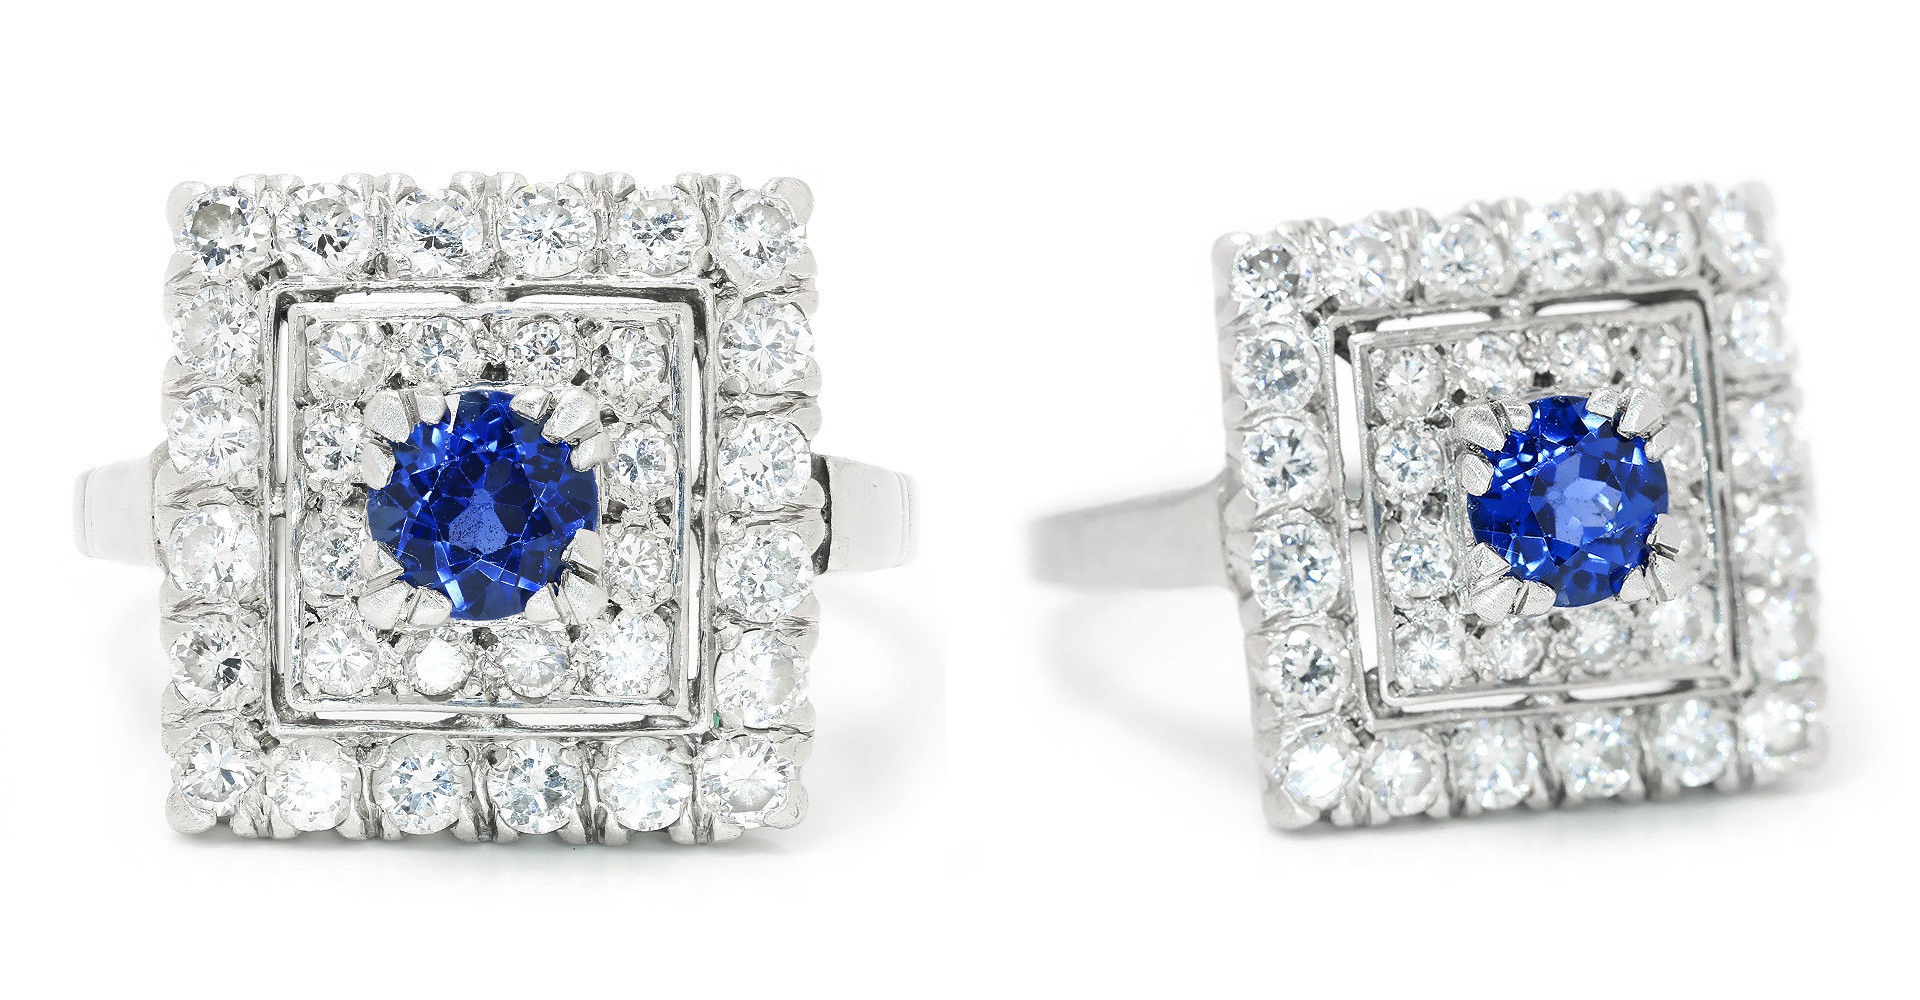 Vintage Art Deco Sapphire Square Ring with Diamonds in Platinum 1.65ctw